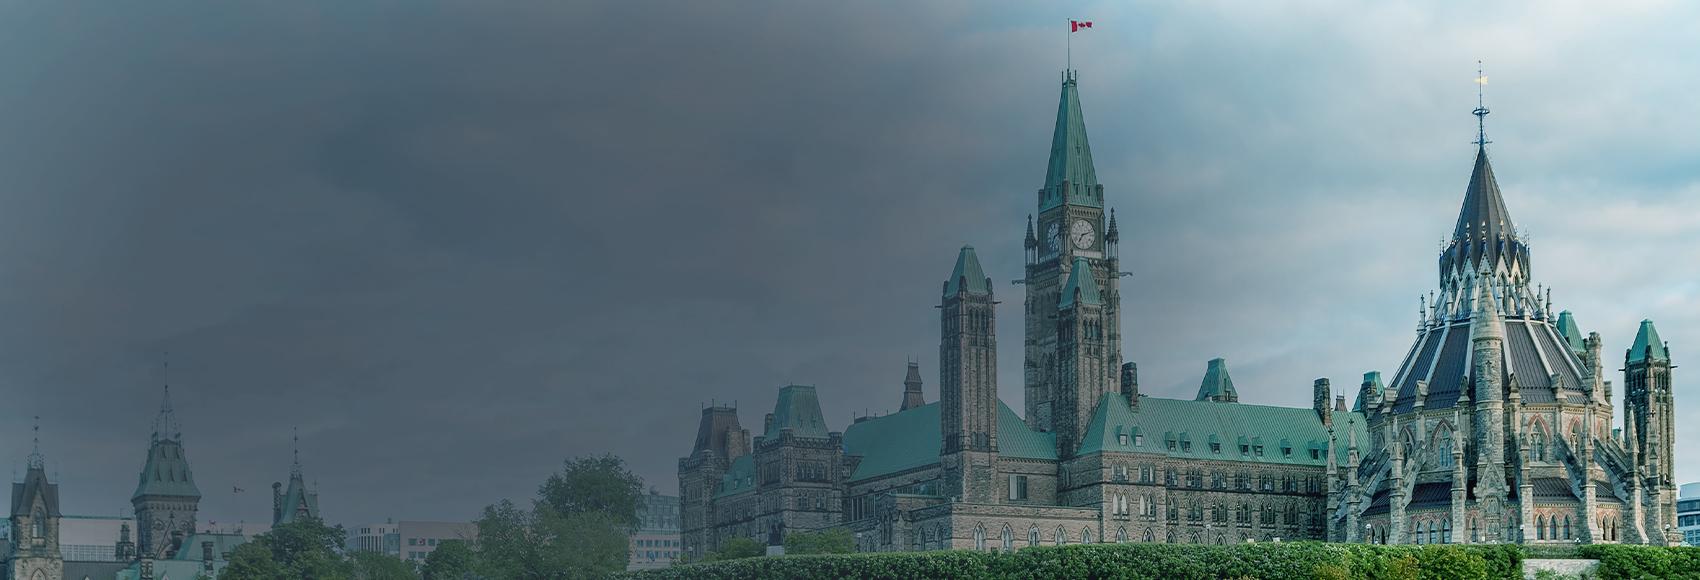 Parliament Hill in Ottawa - Ontario, Canada